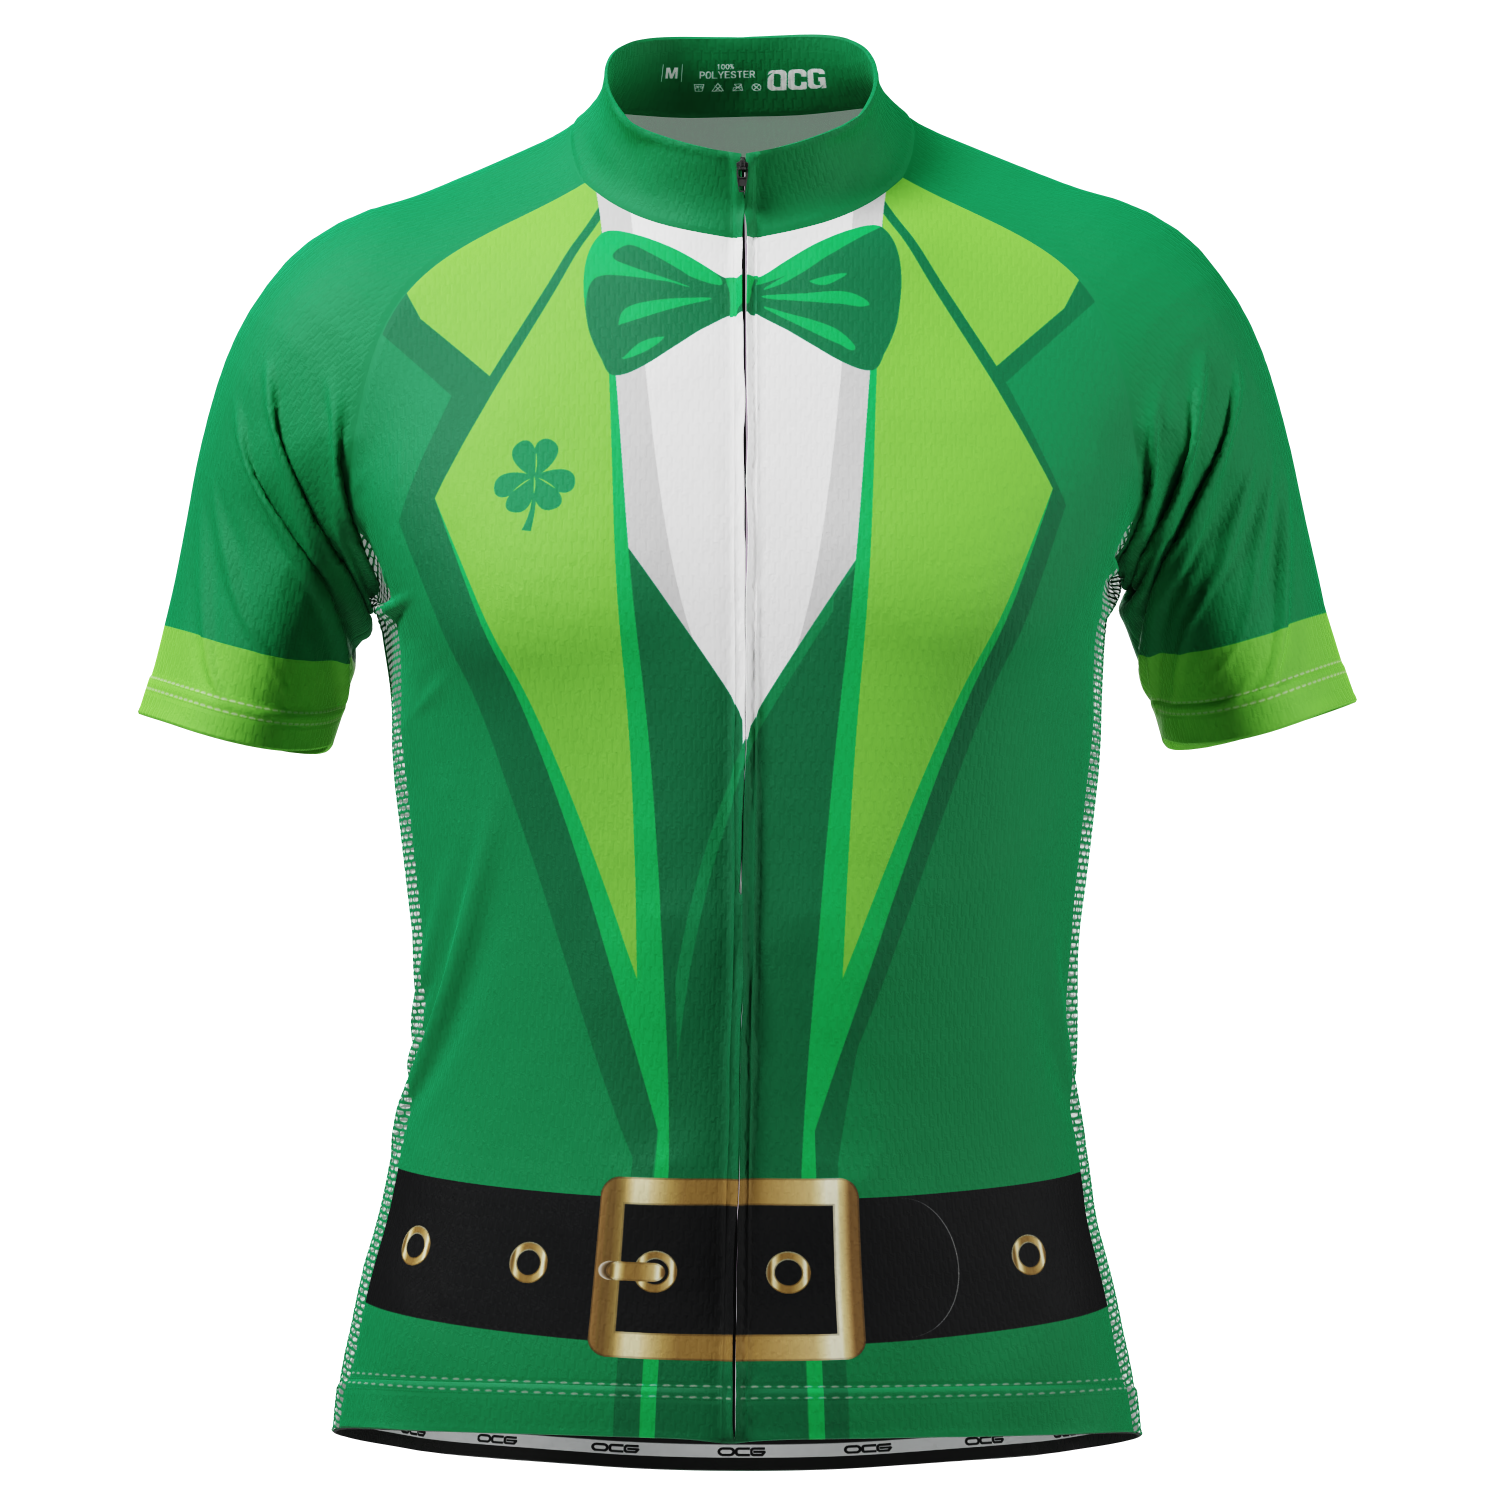 Men's Leprechaun Short Sleeve Cycling Jersey